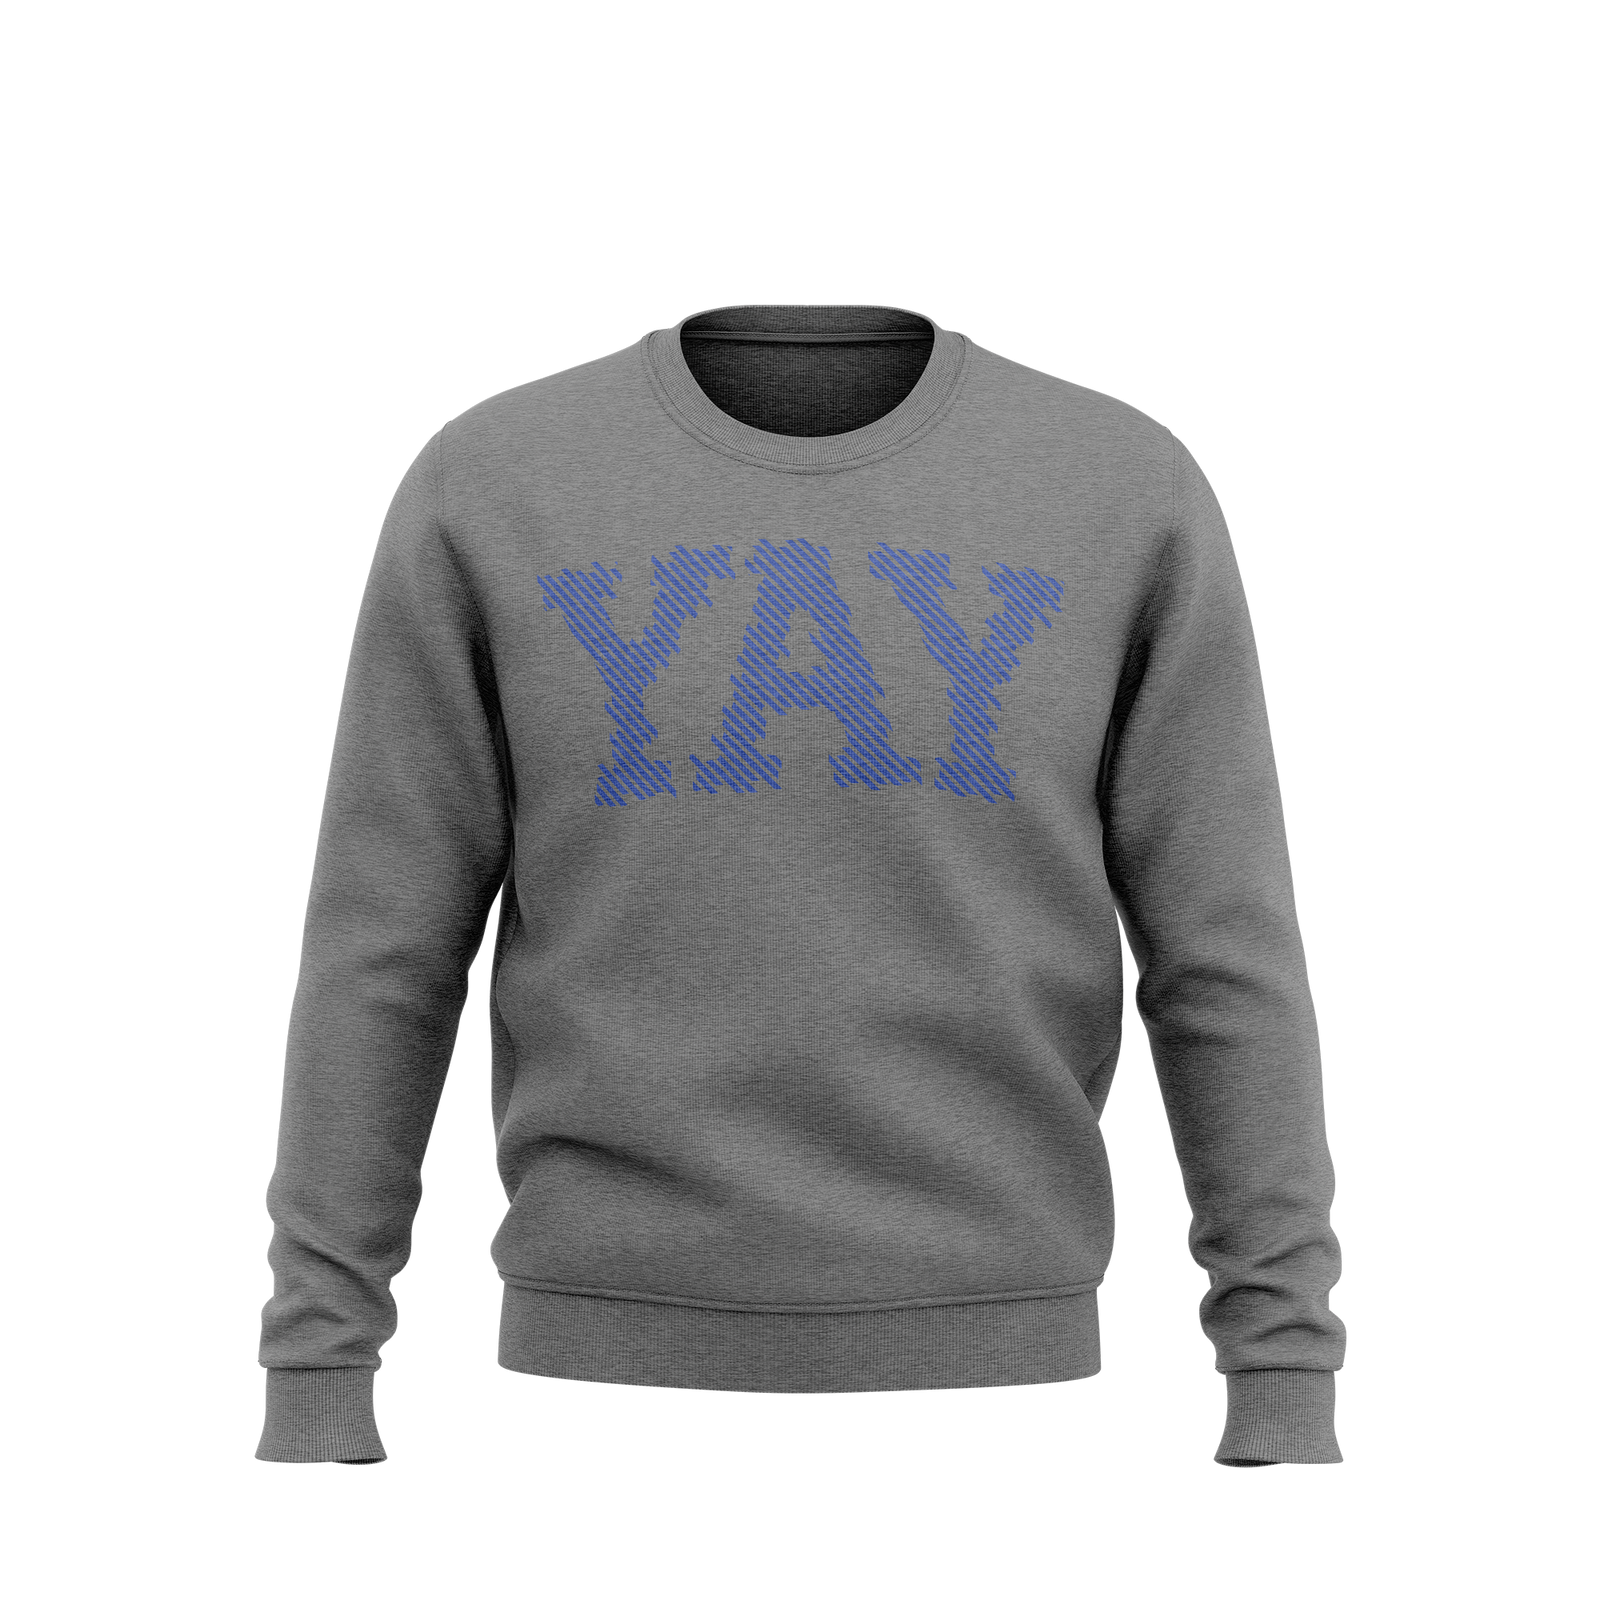 YAY Lines Crewneck Sweatshirt (Gray)